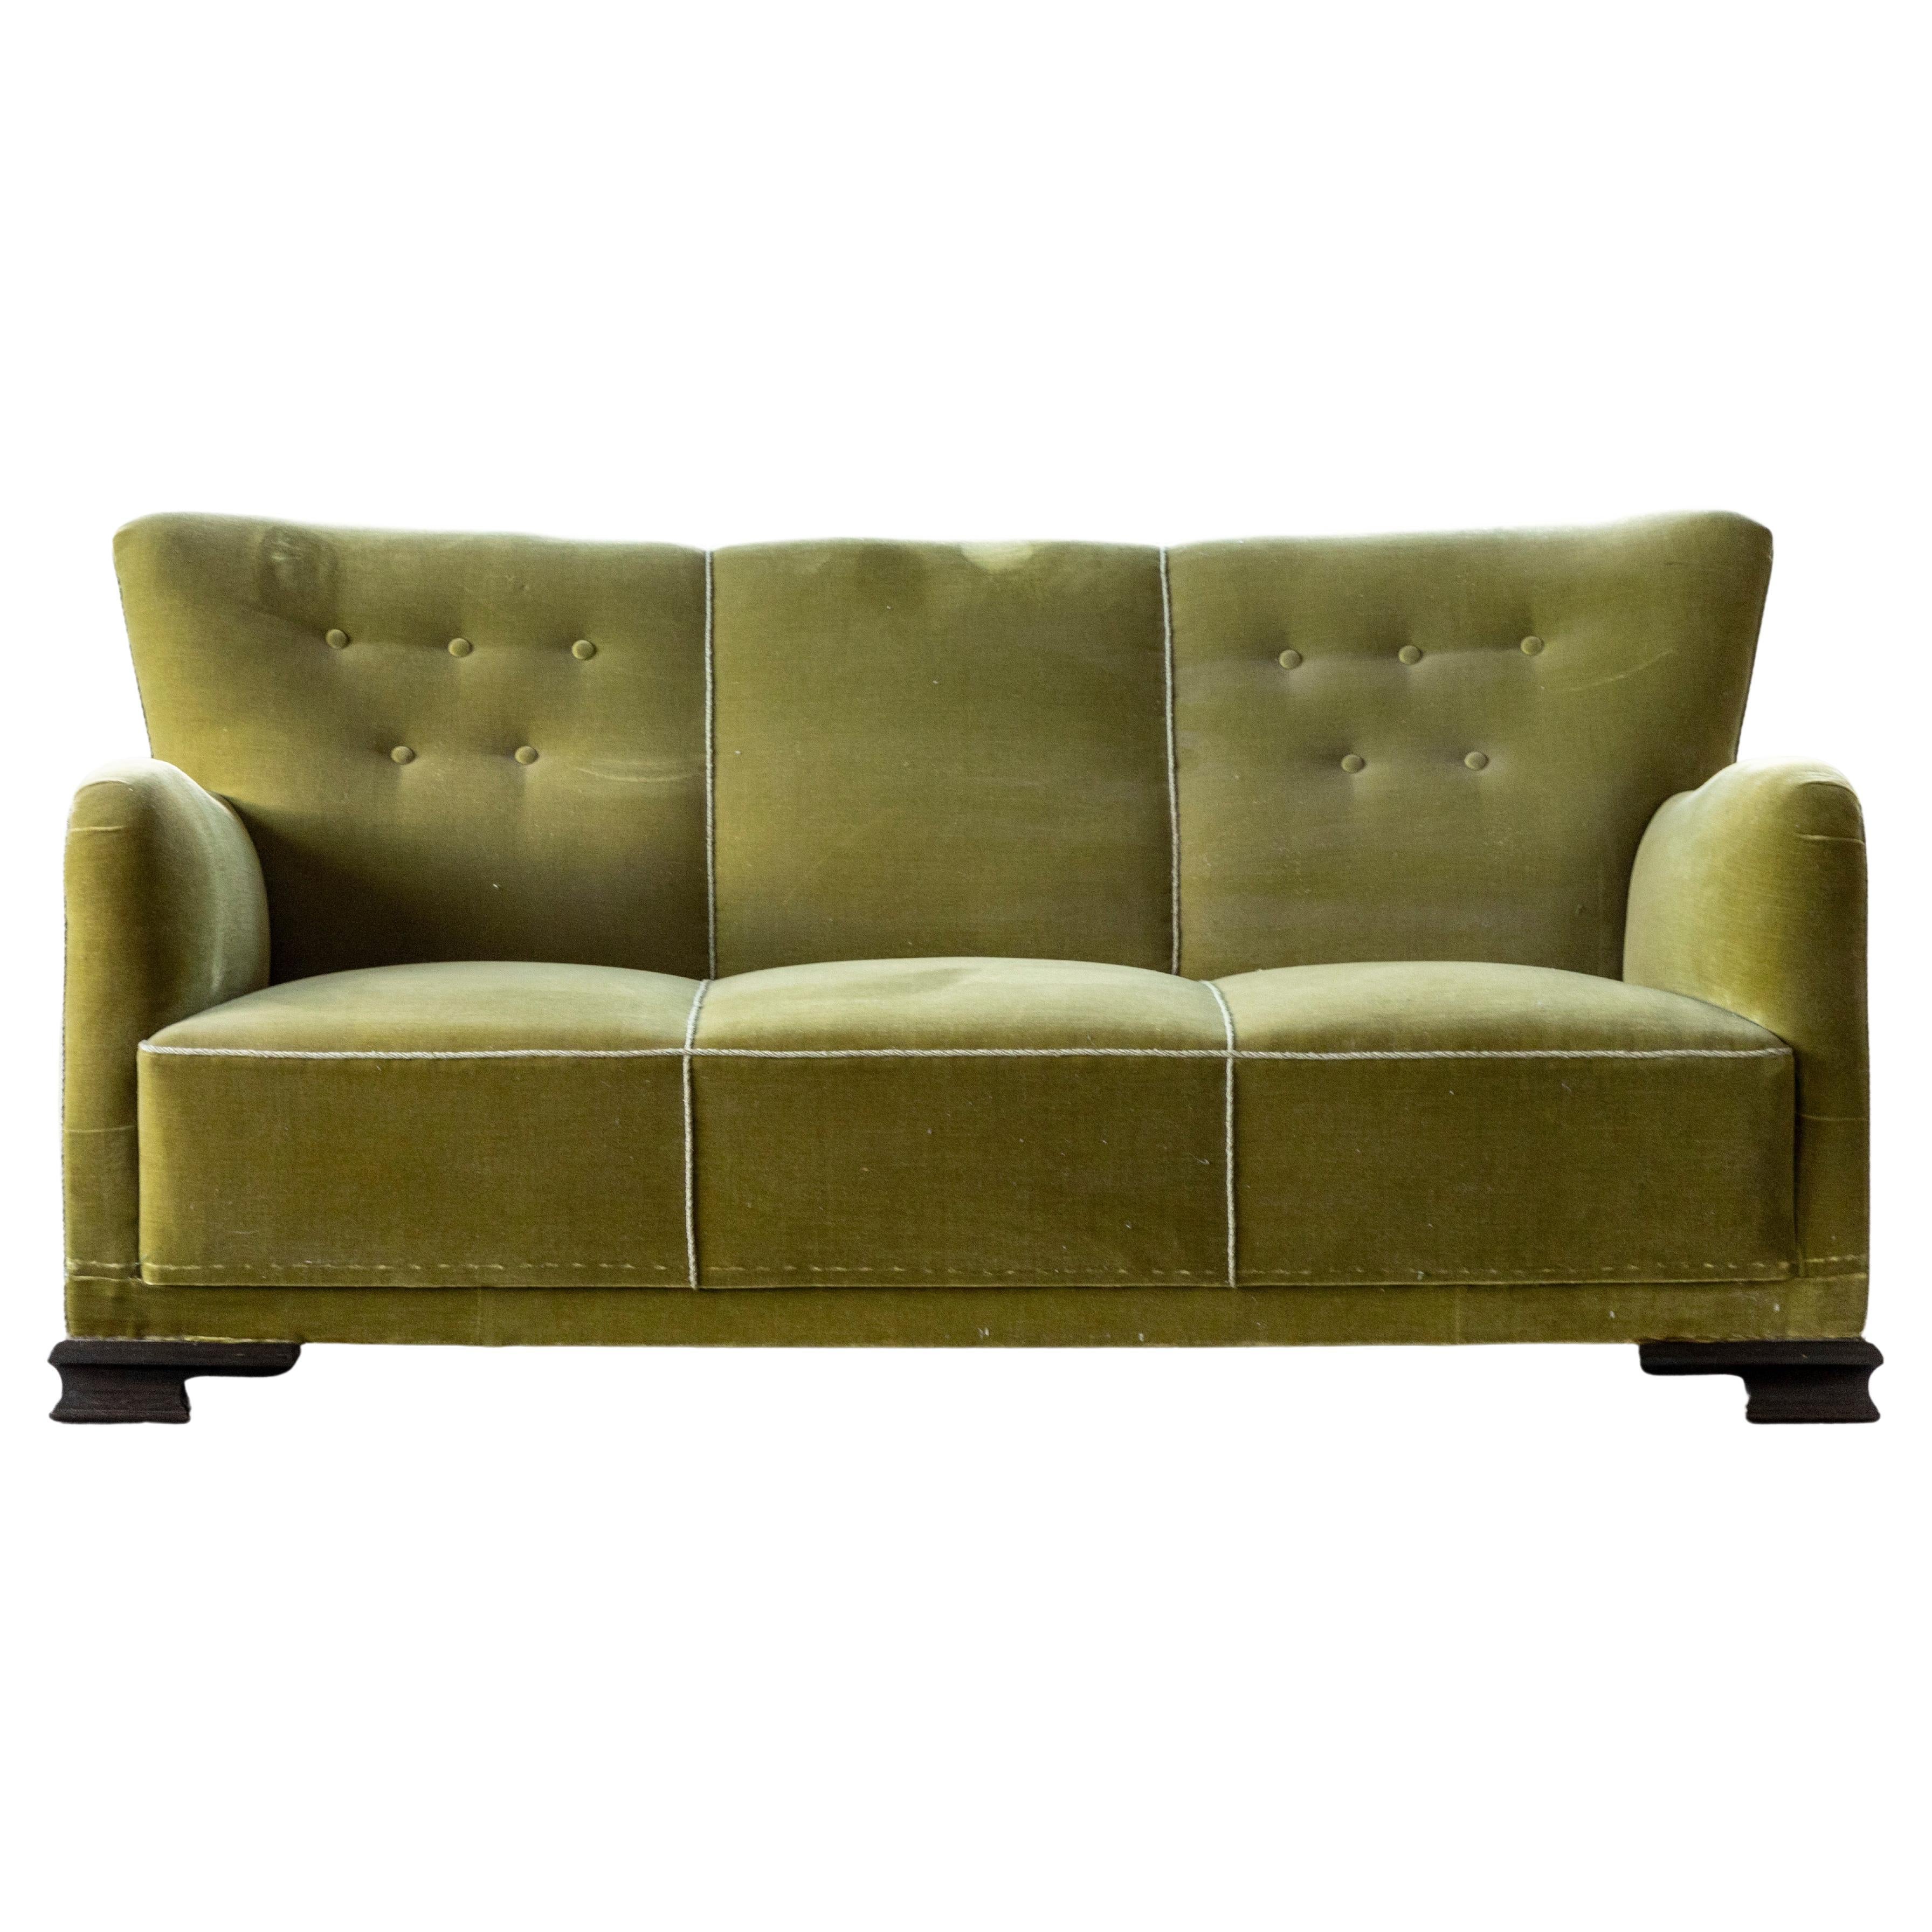 Danish Midcentury Sofa in Green Mohair with Art Deco Legs